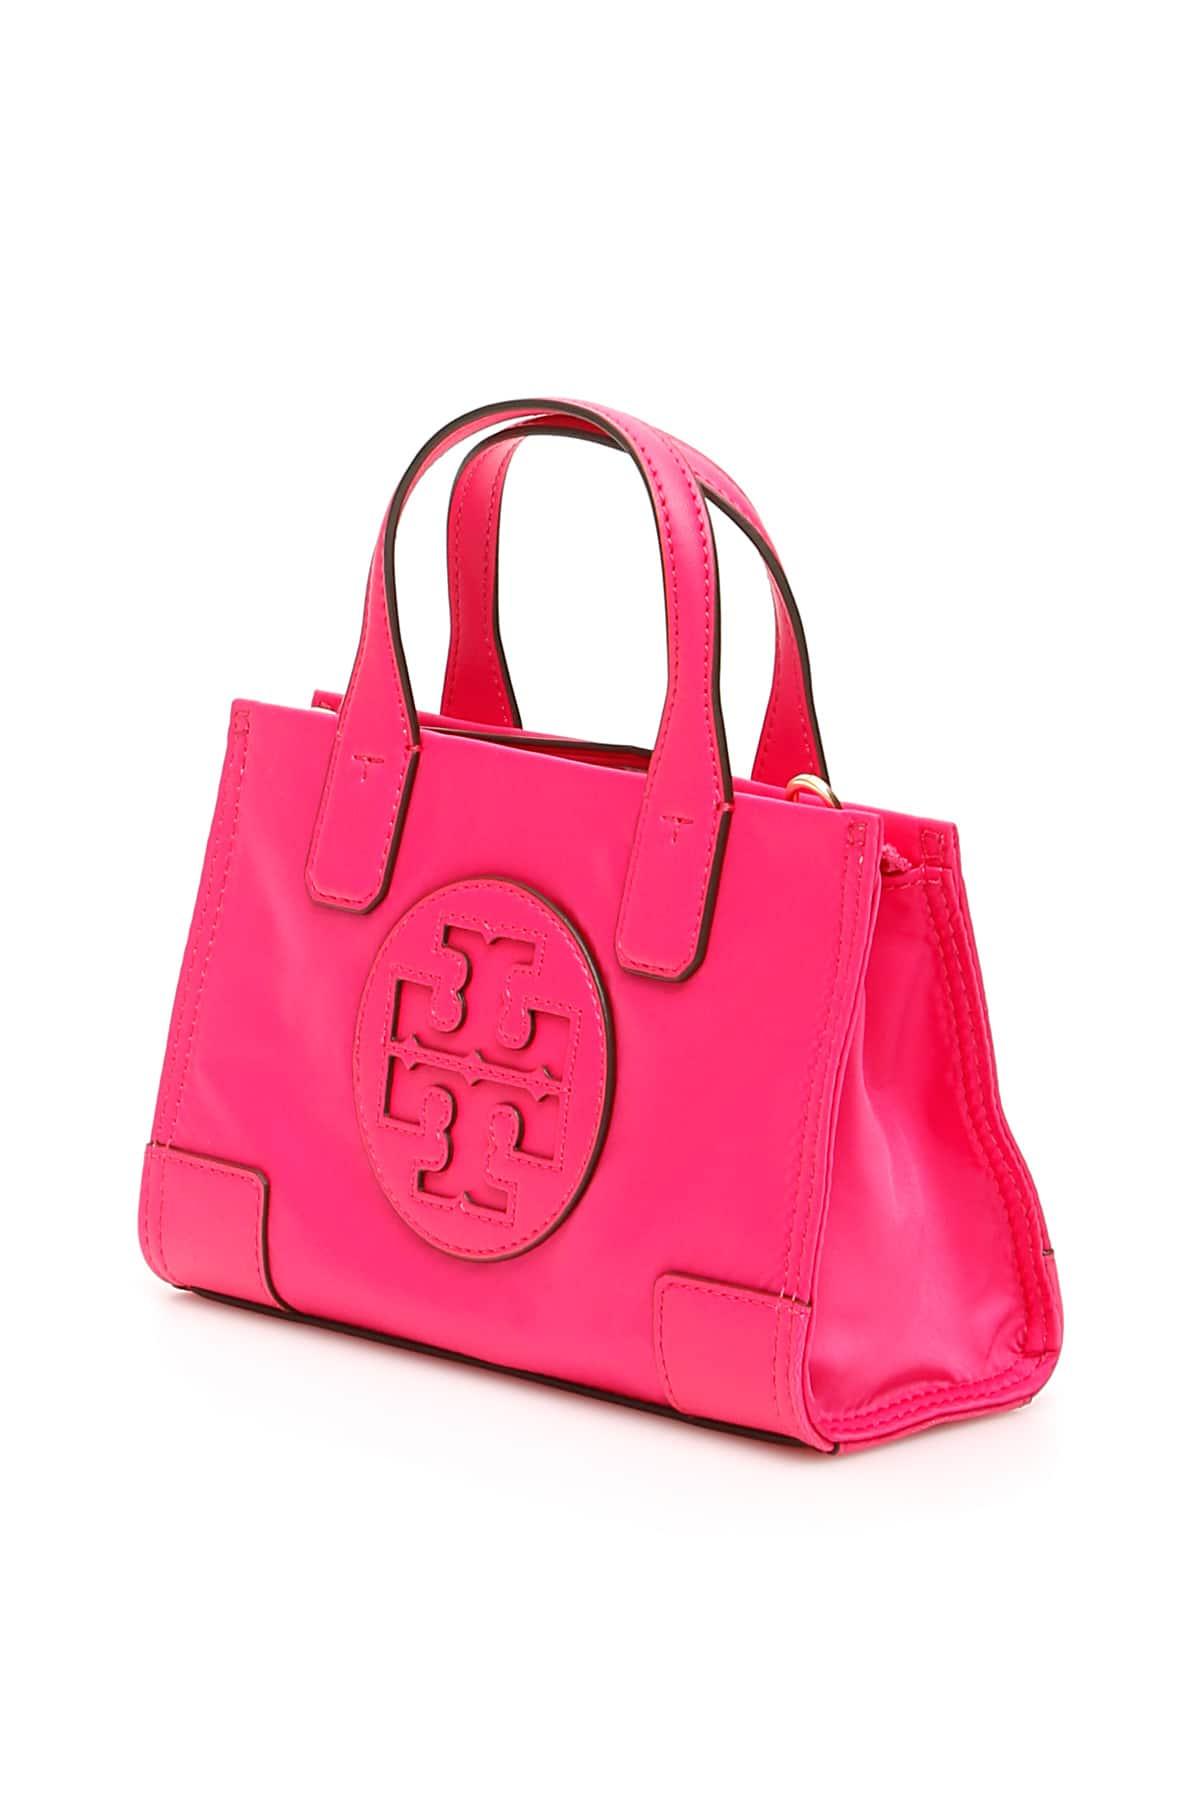 Tory Burch Ella Micro Tote Bag in Pink | Lyst